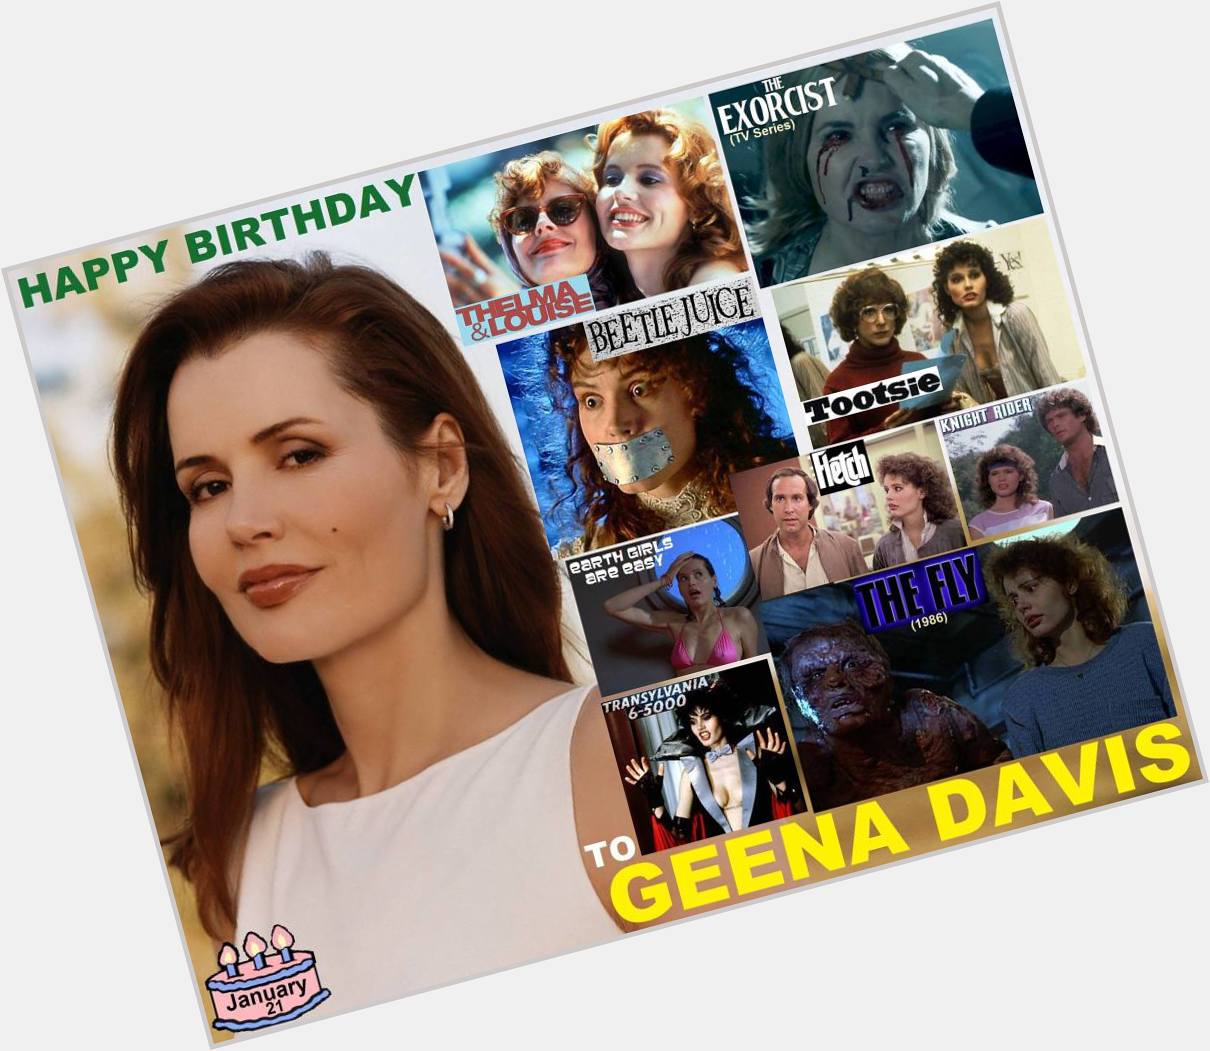 1-21 Happy birthday to Geena Davis.  